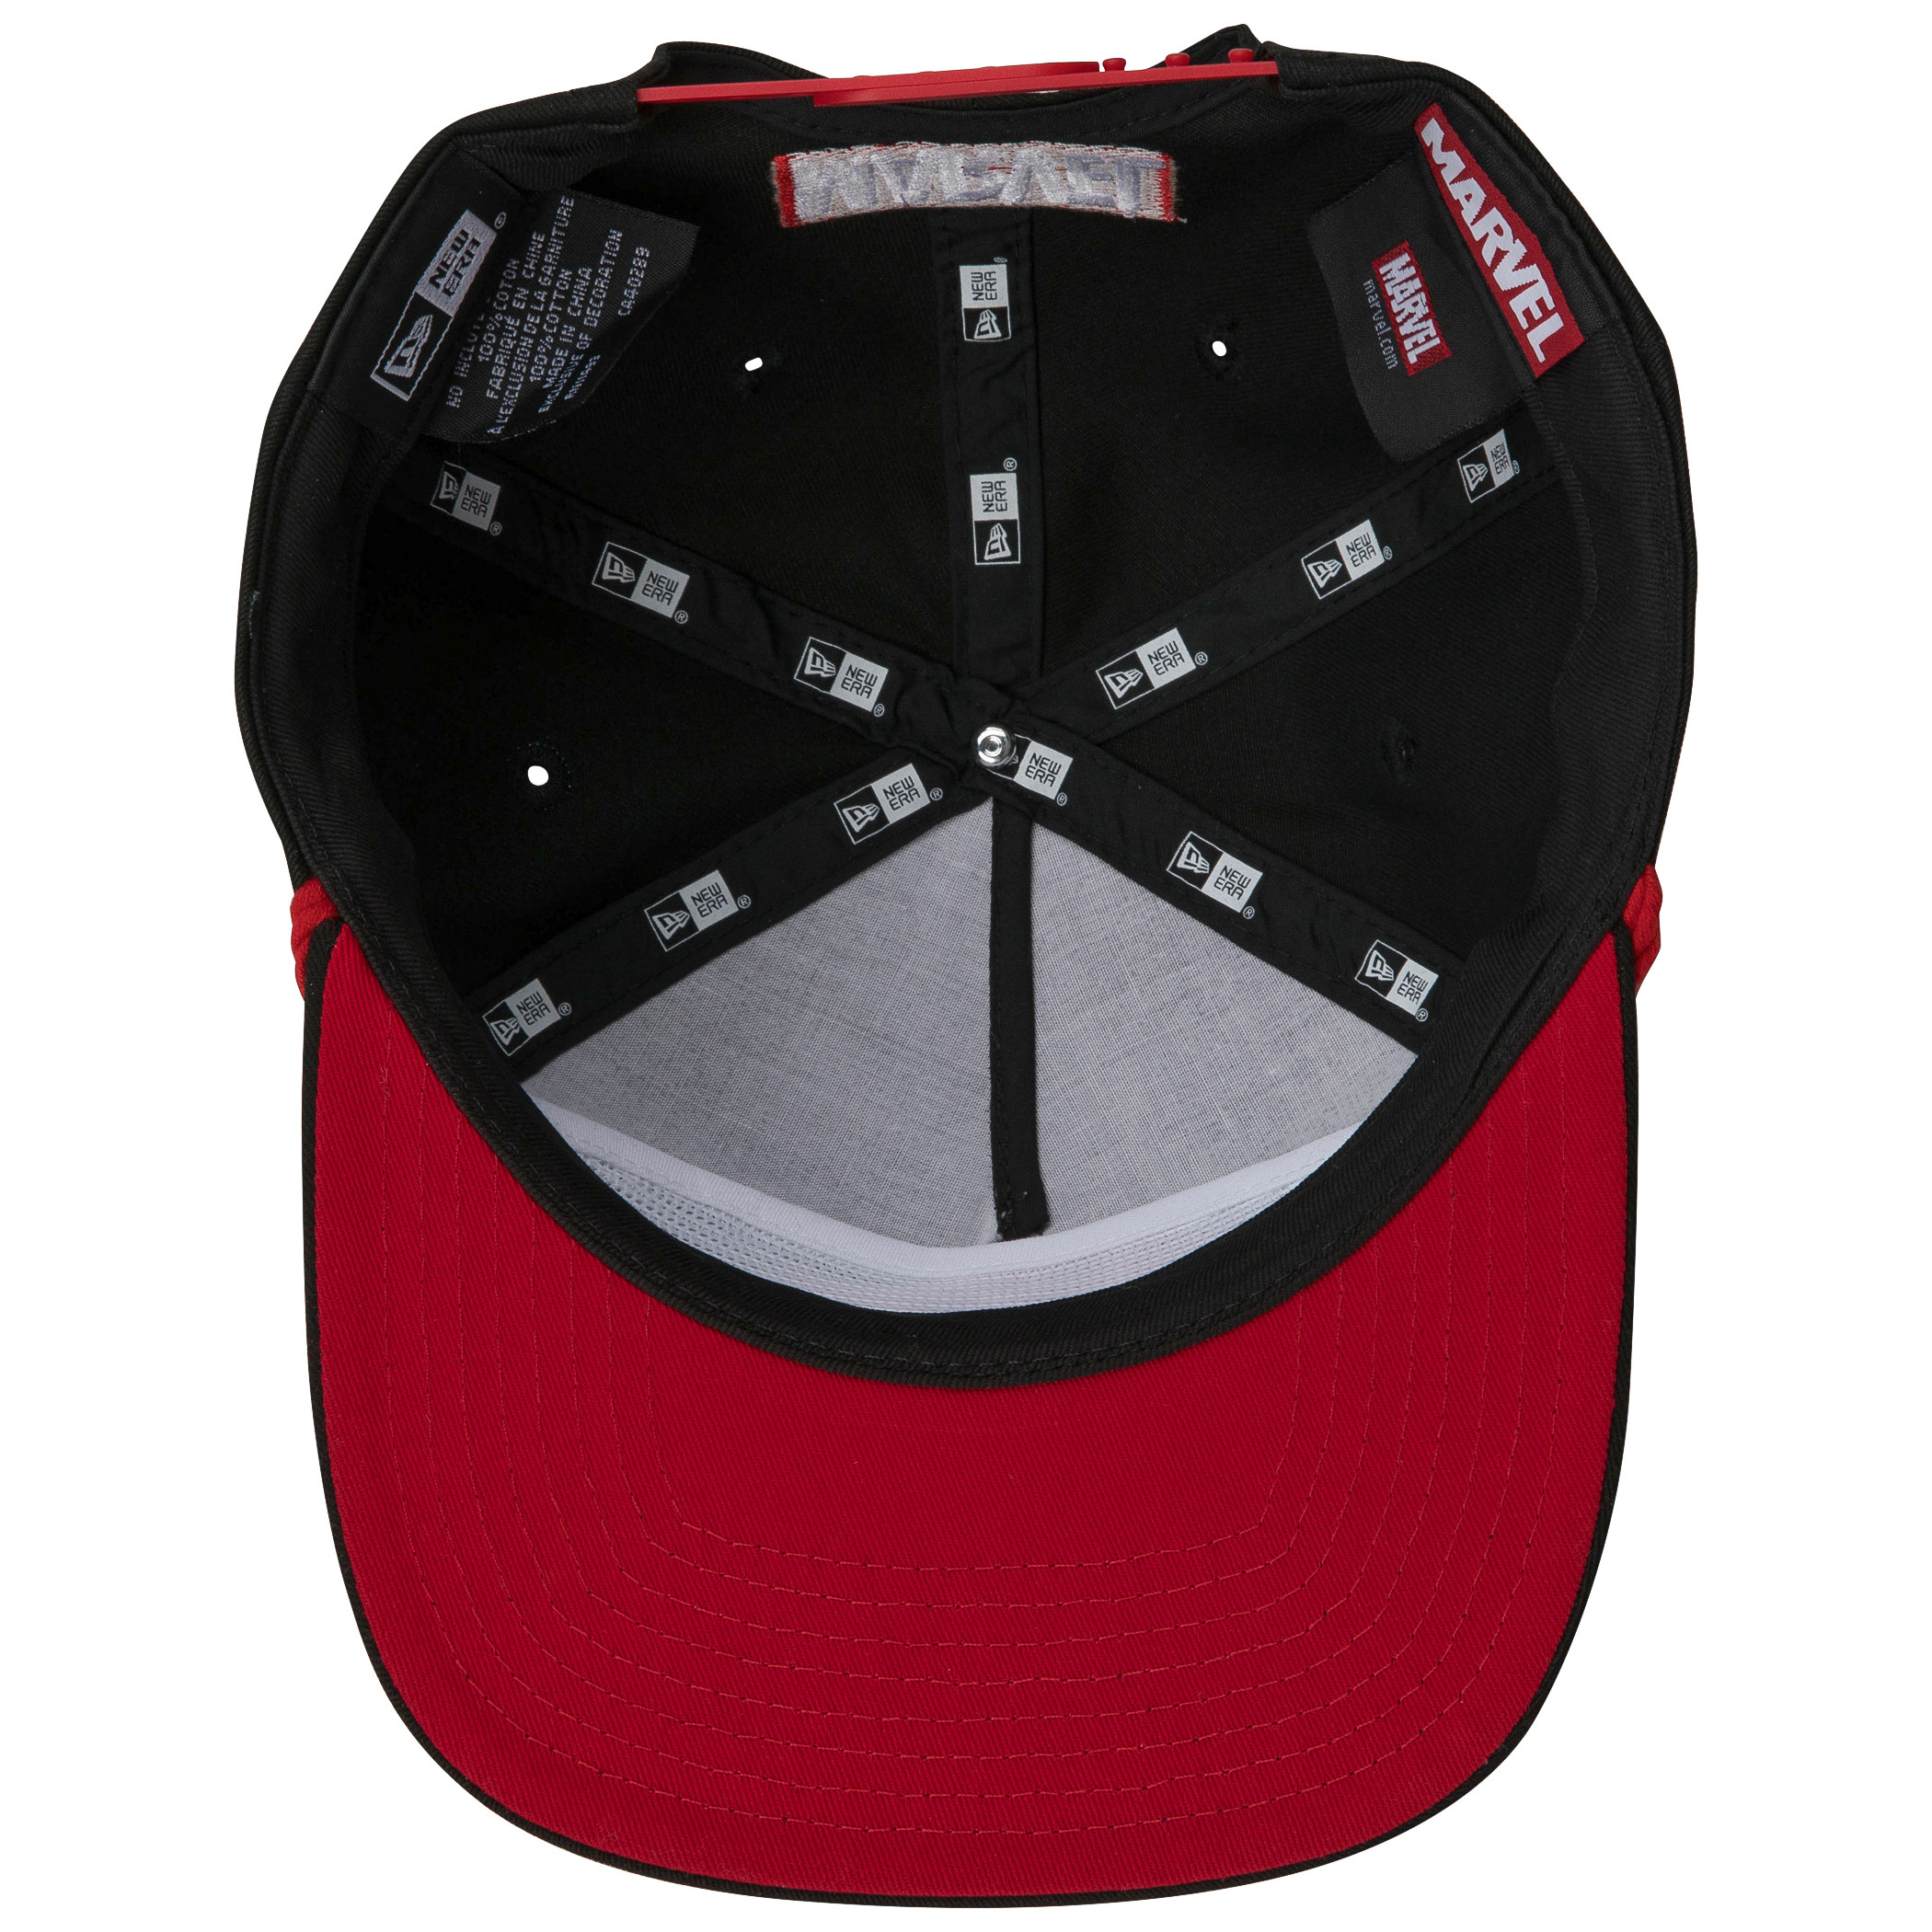 Daredevil Logo Black Colorway New Era Adjustable Golfer Rope Hat